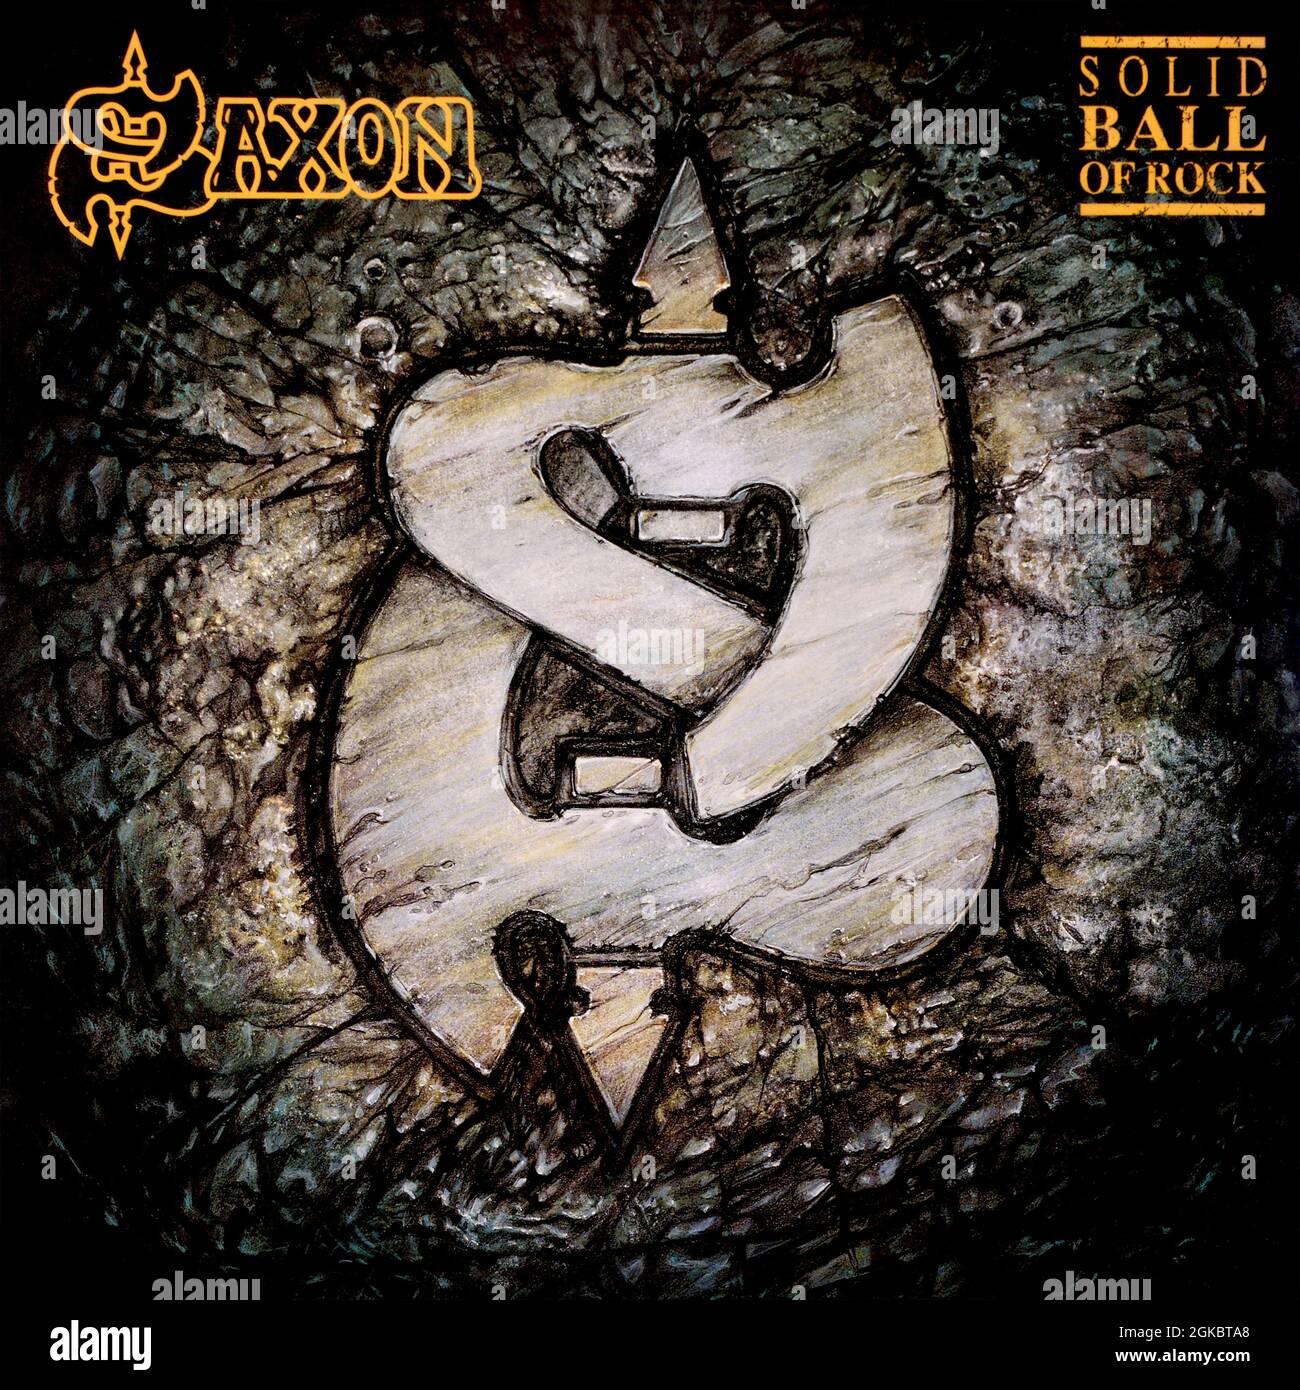 Saxon - portada original del álbum de vinilo - Solid Ball of Rock - 1990 Foto de stock